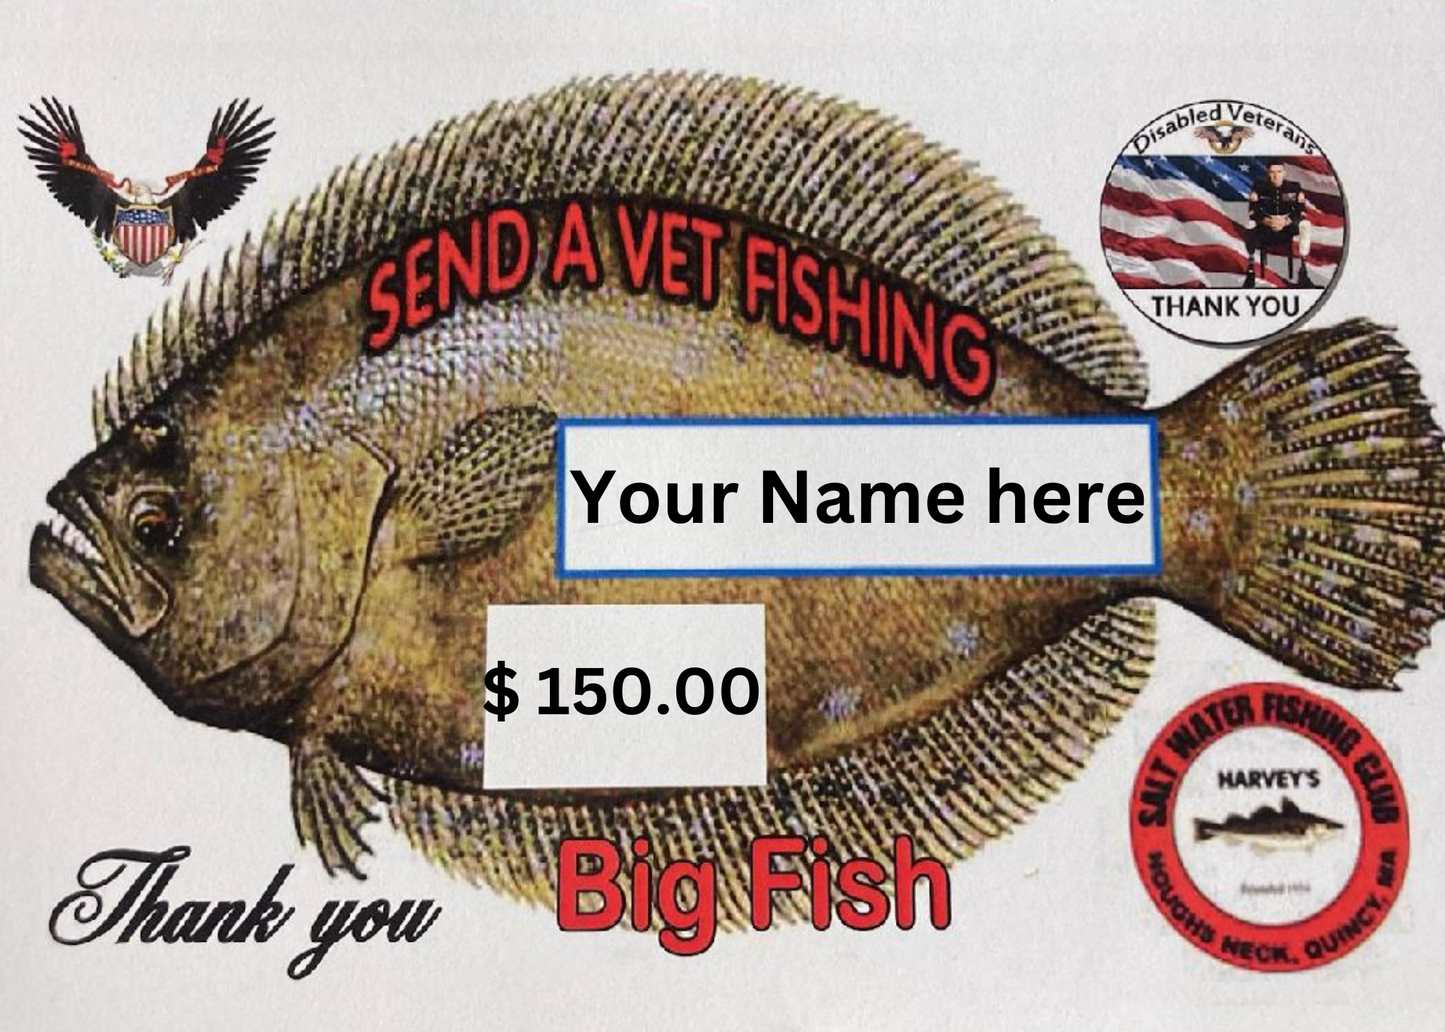 $ 150.00 Donation Card